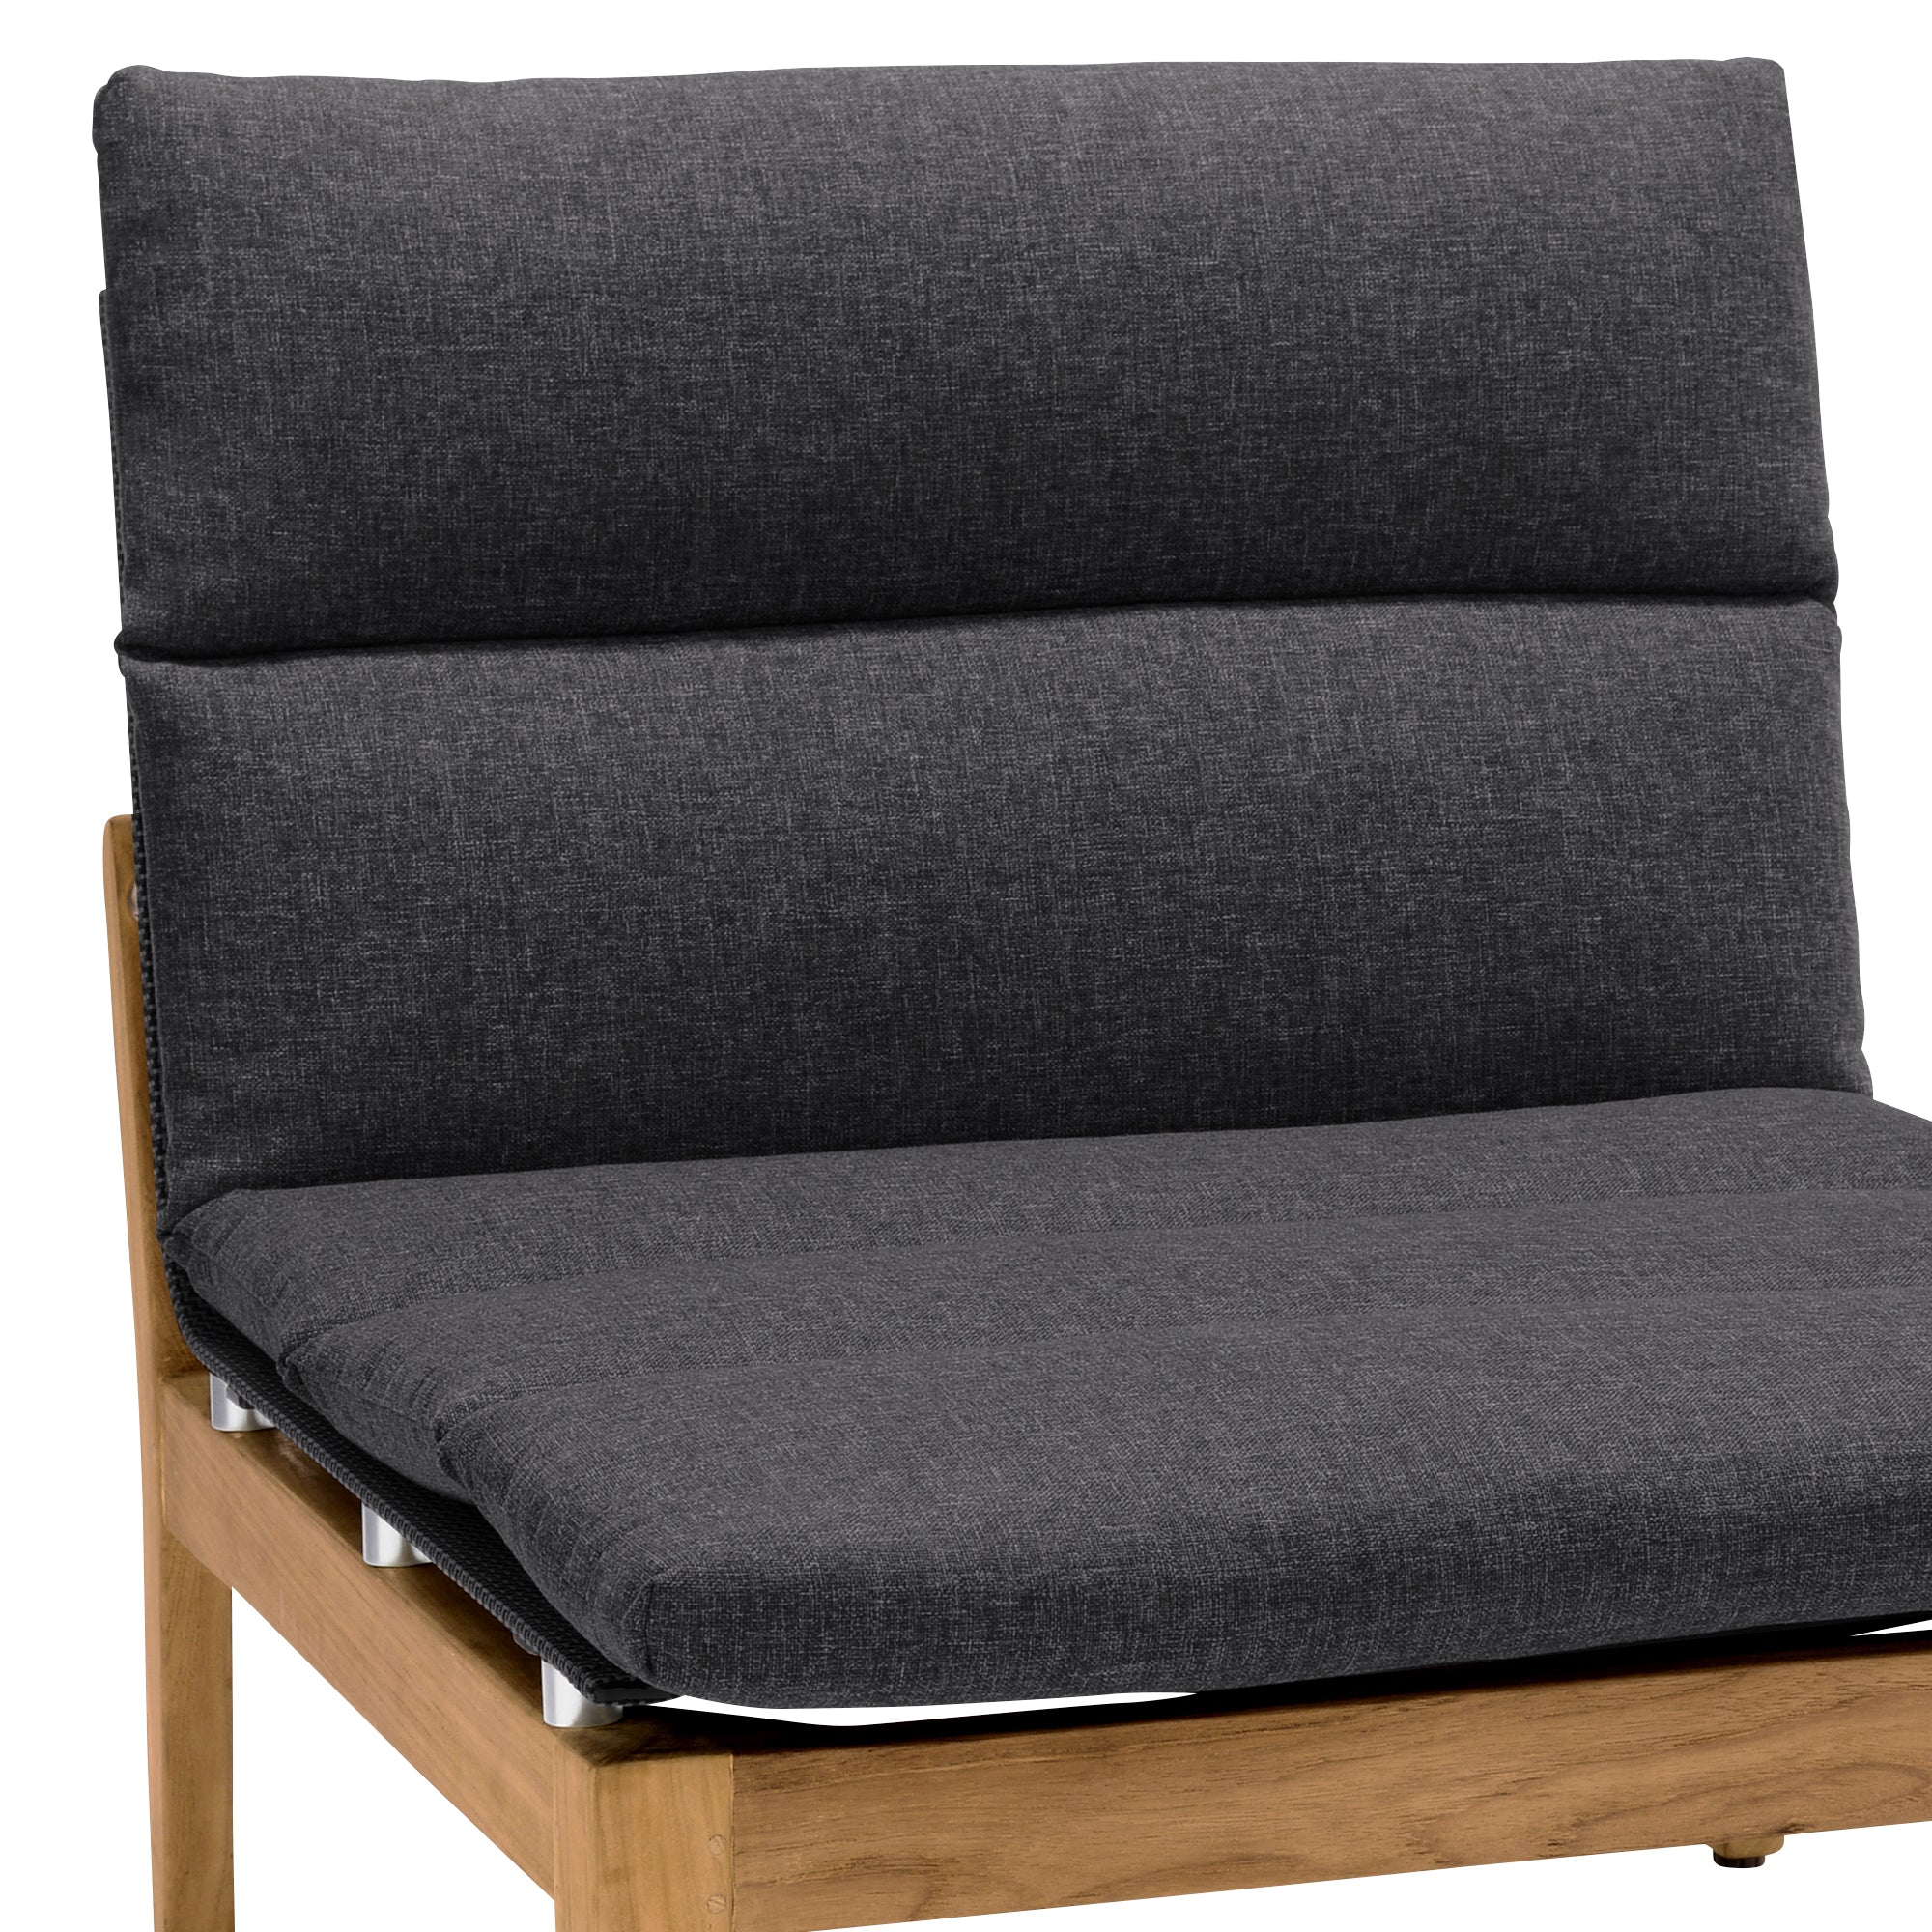 Armen Living - Arno Outdoor Modular Teak Wood Lounge Chair in Olefin - Set of 2 - LCARCHDK2PC